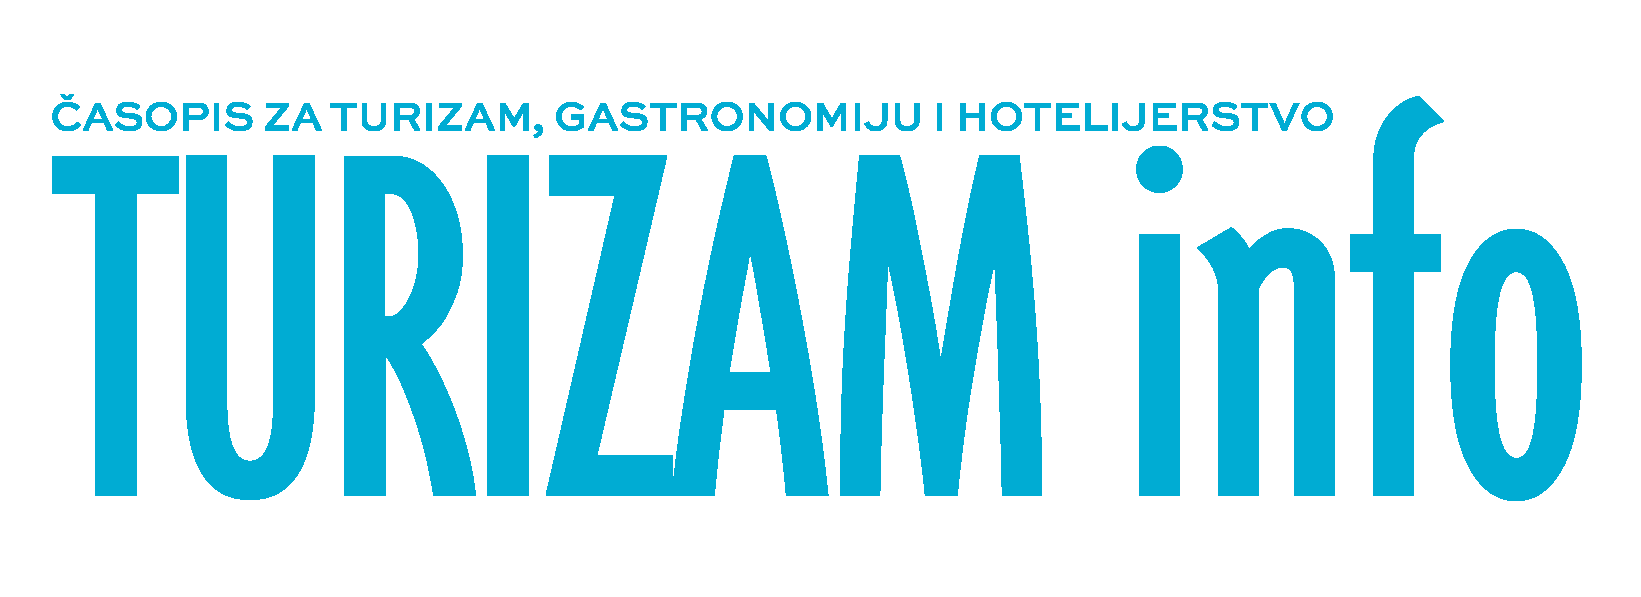 Turizam info logo 2017